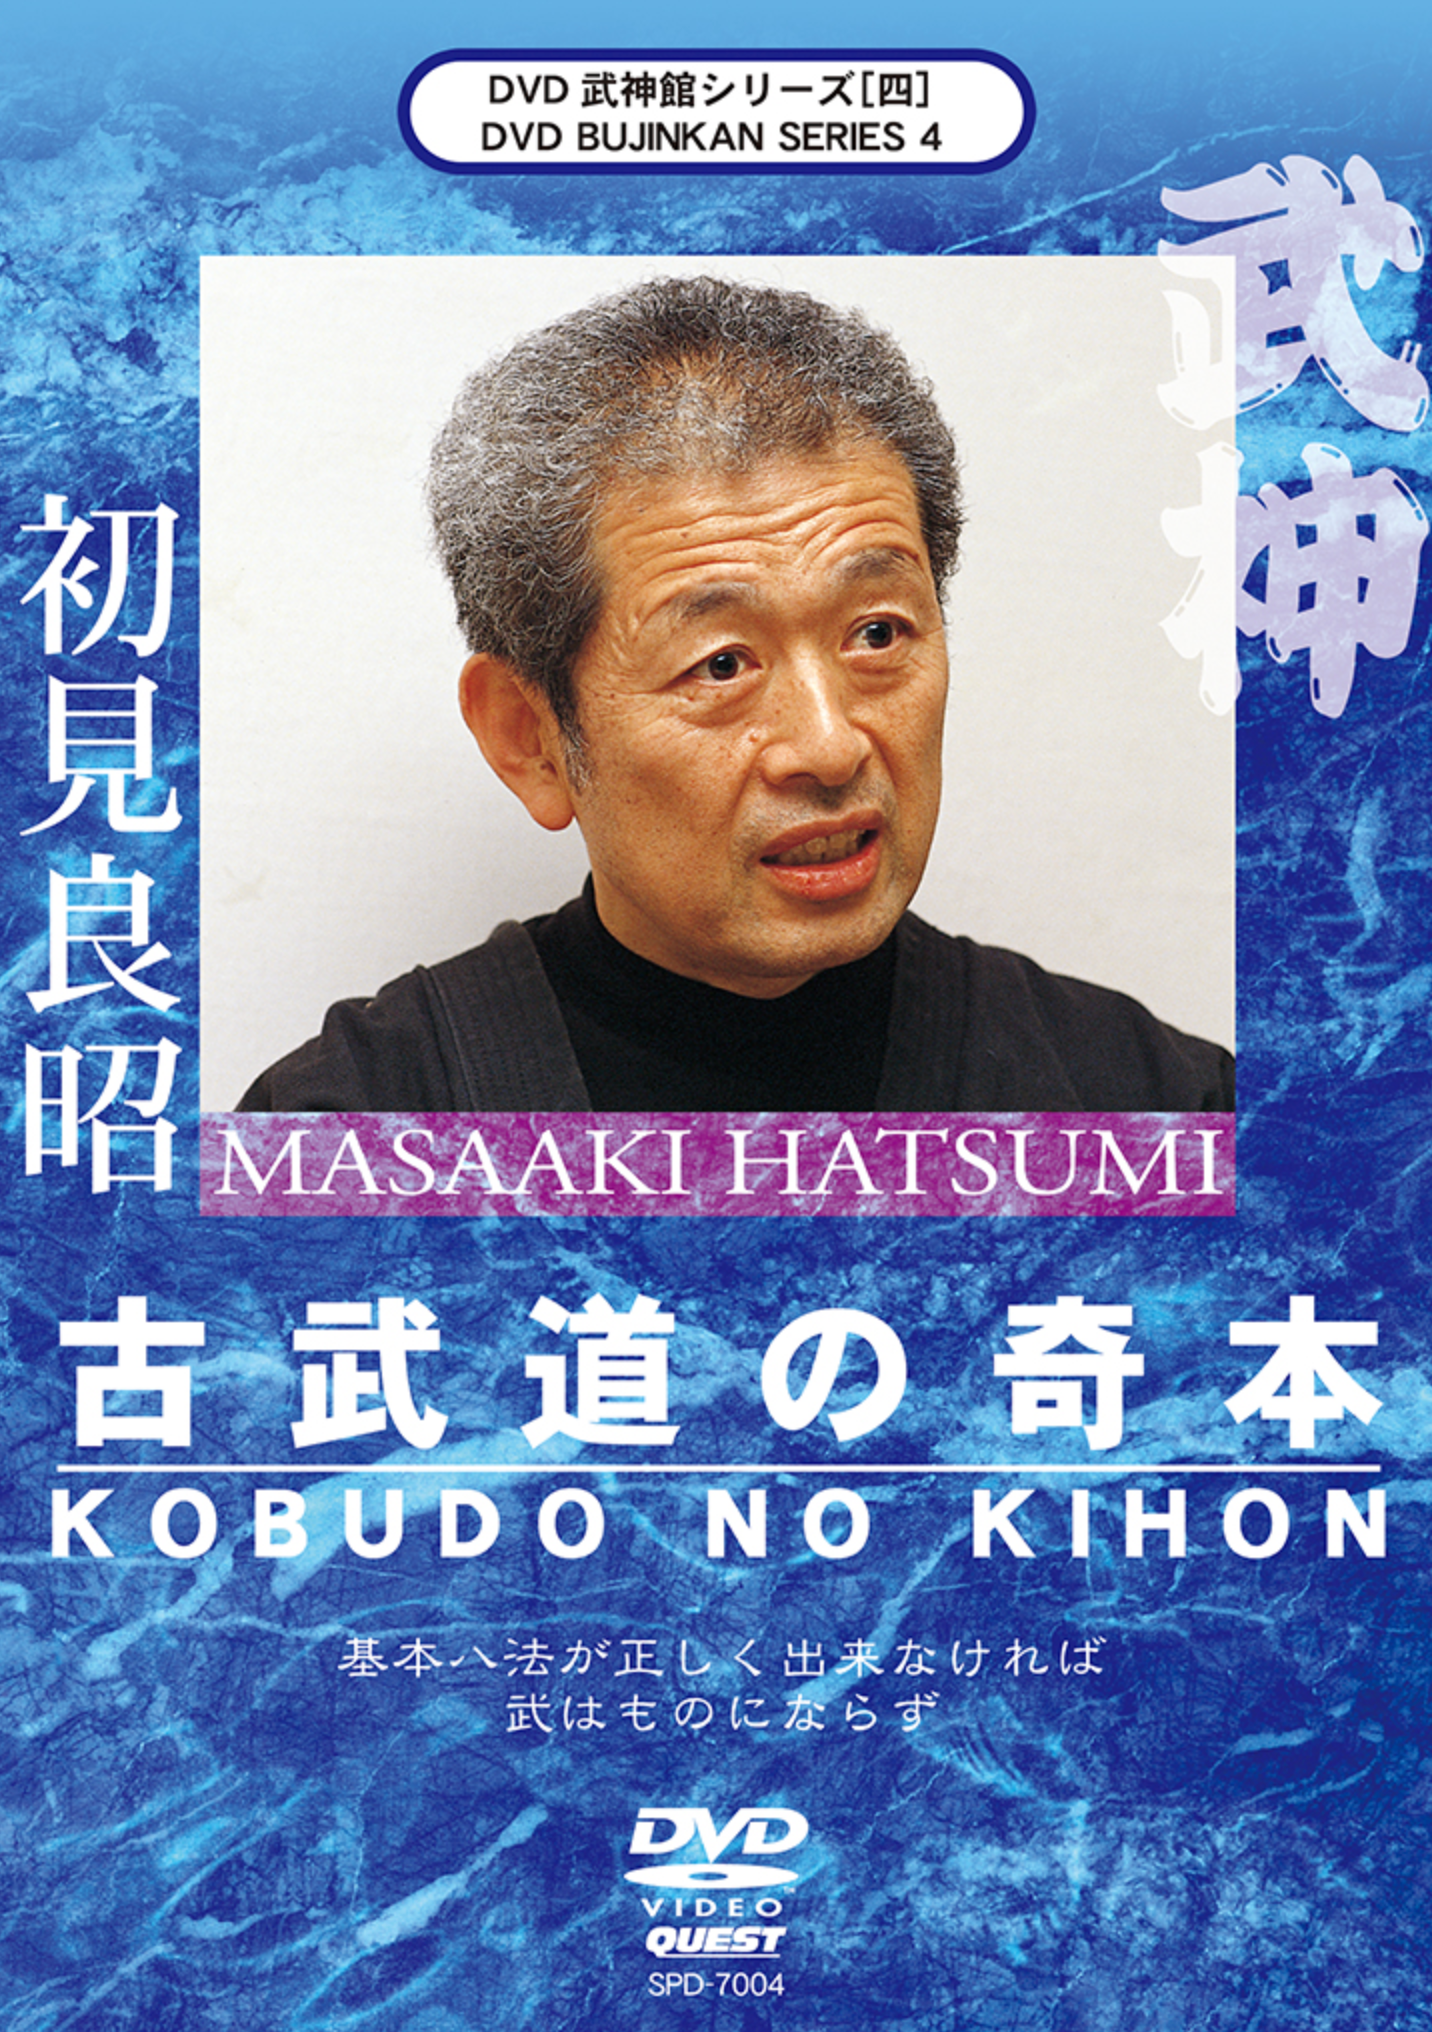 Bujinkan DVD Series 4: Kobudo no Kihon with Masaaki Hatsumi - Budovideos Inc